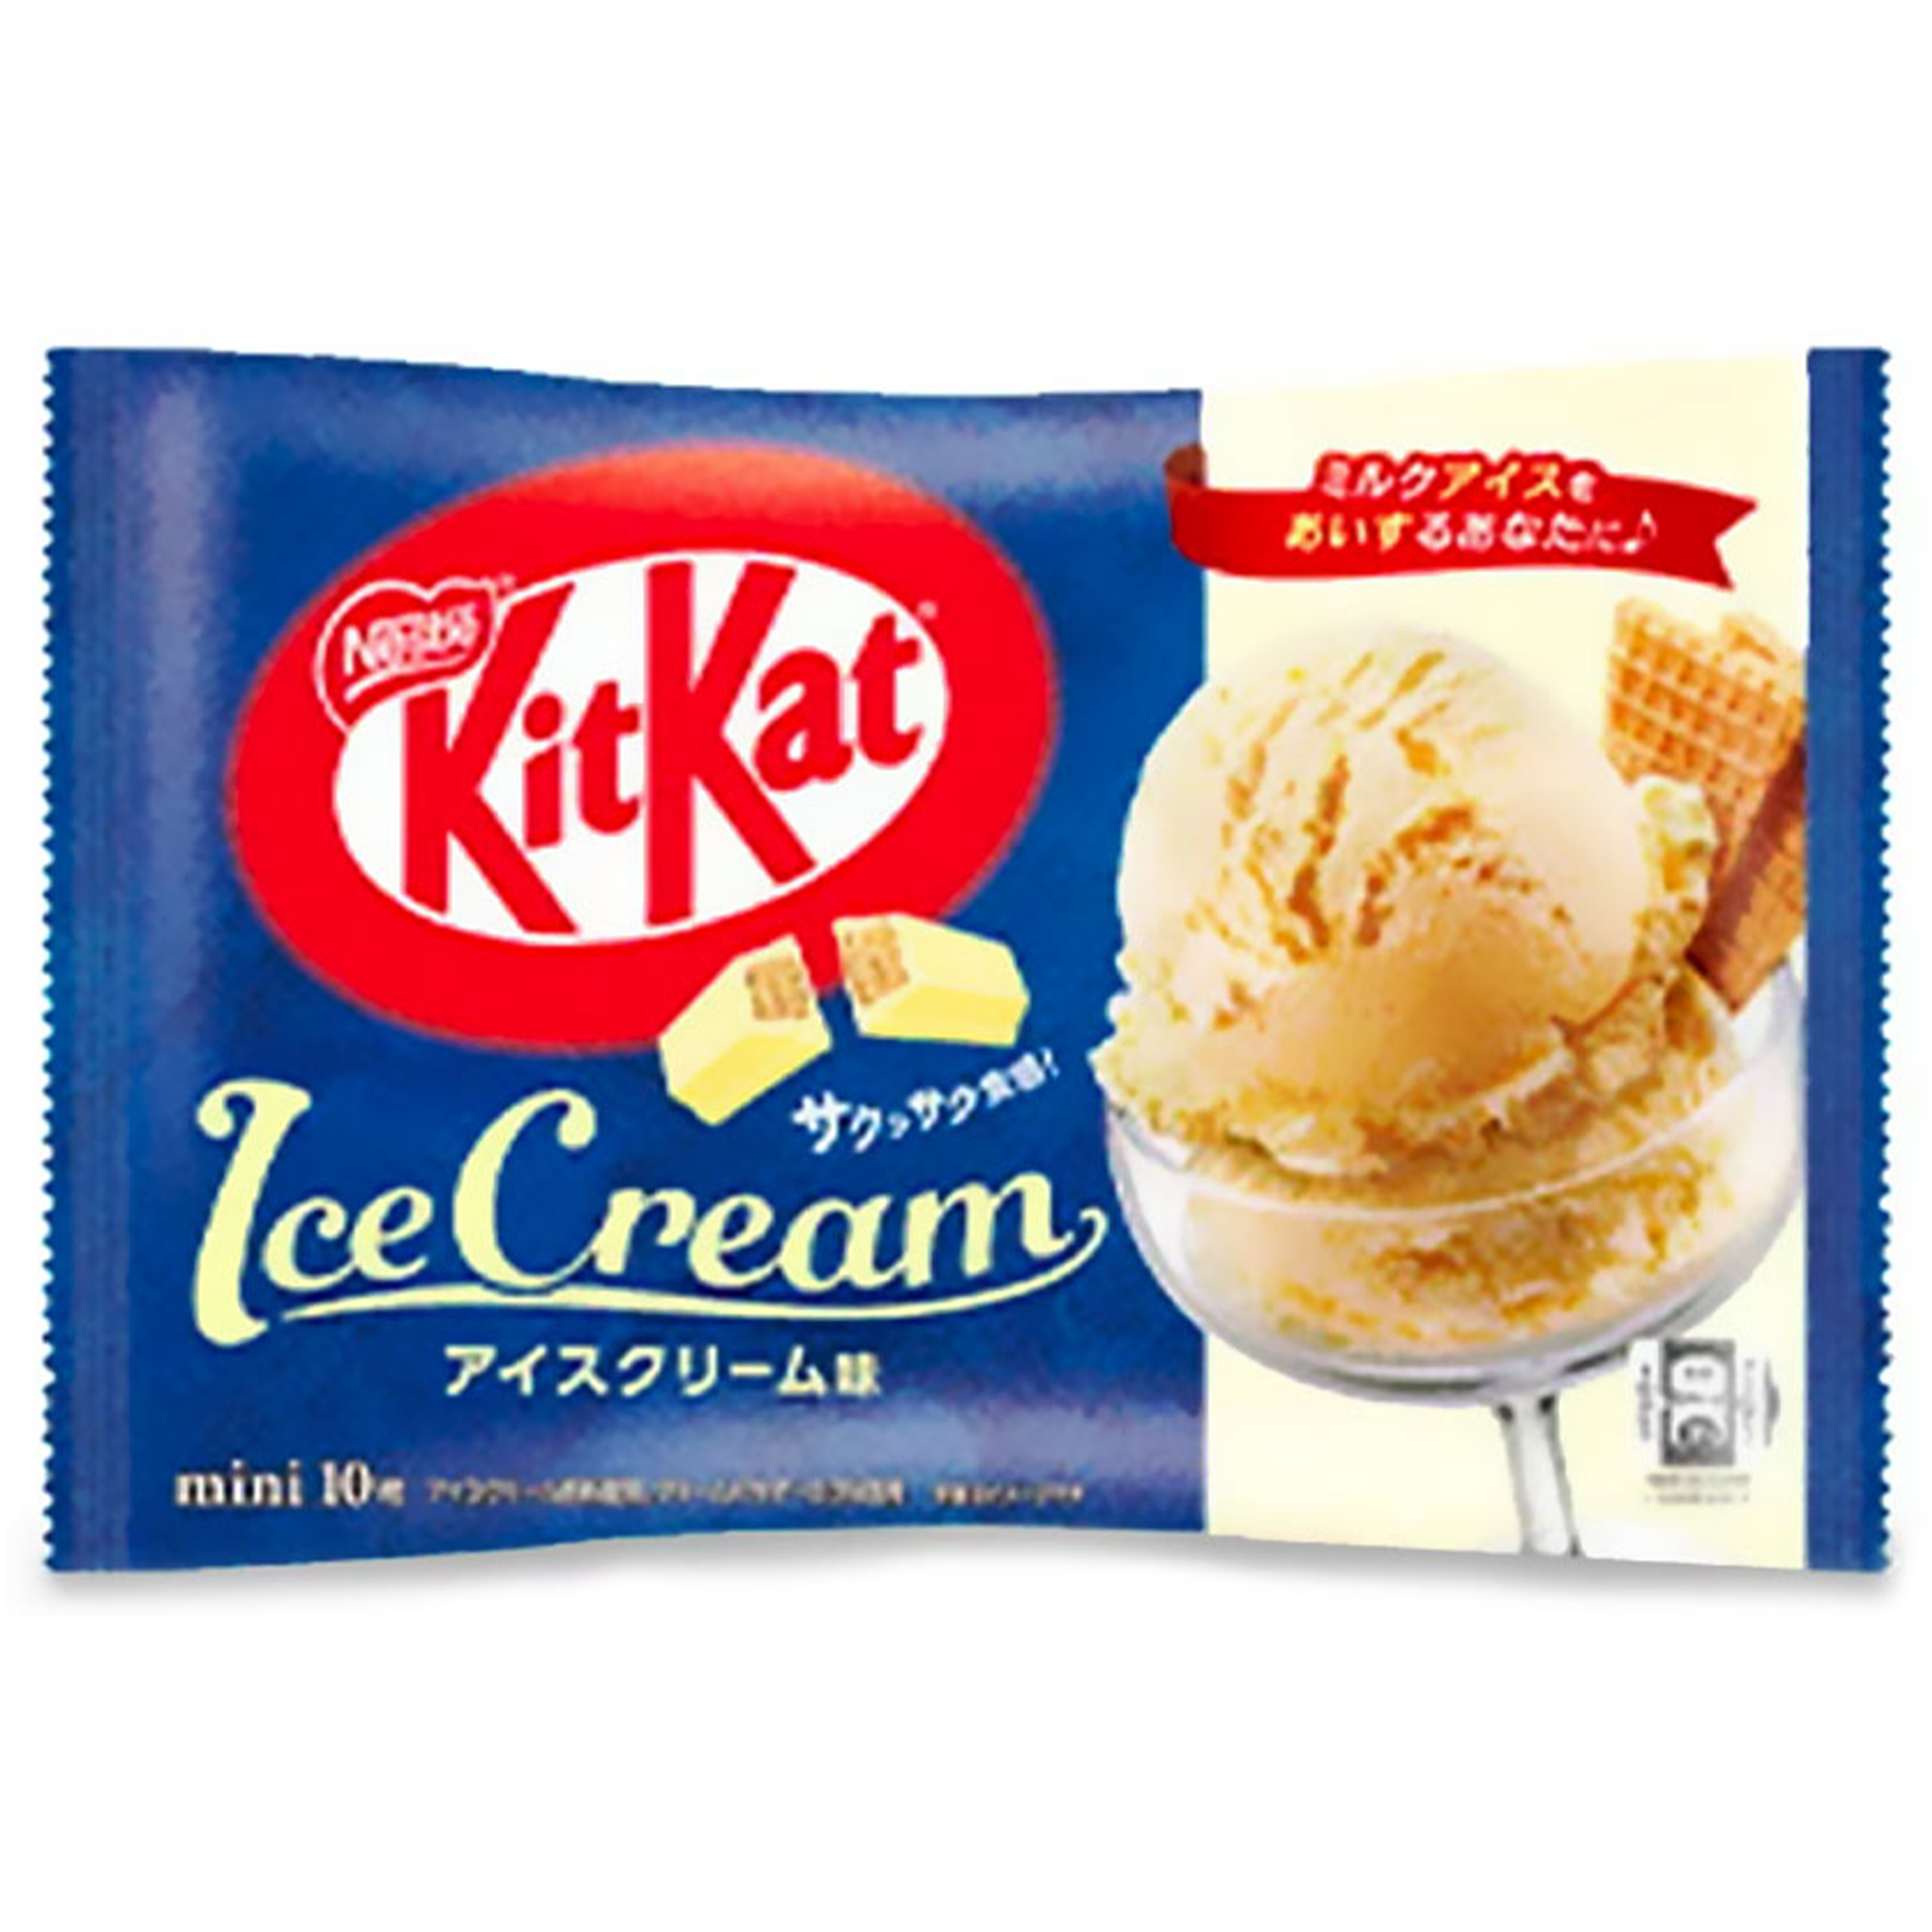 Kit Kat Ice Cream (Japan)